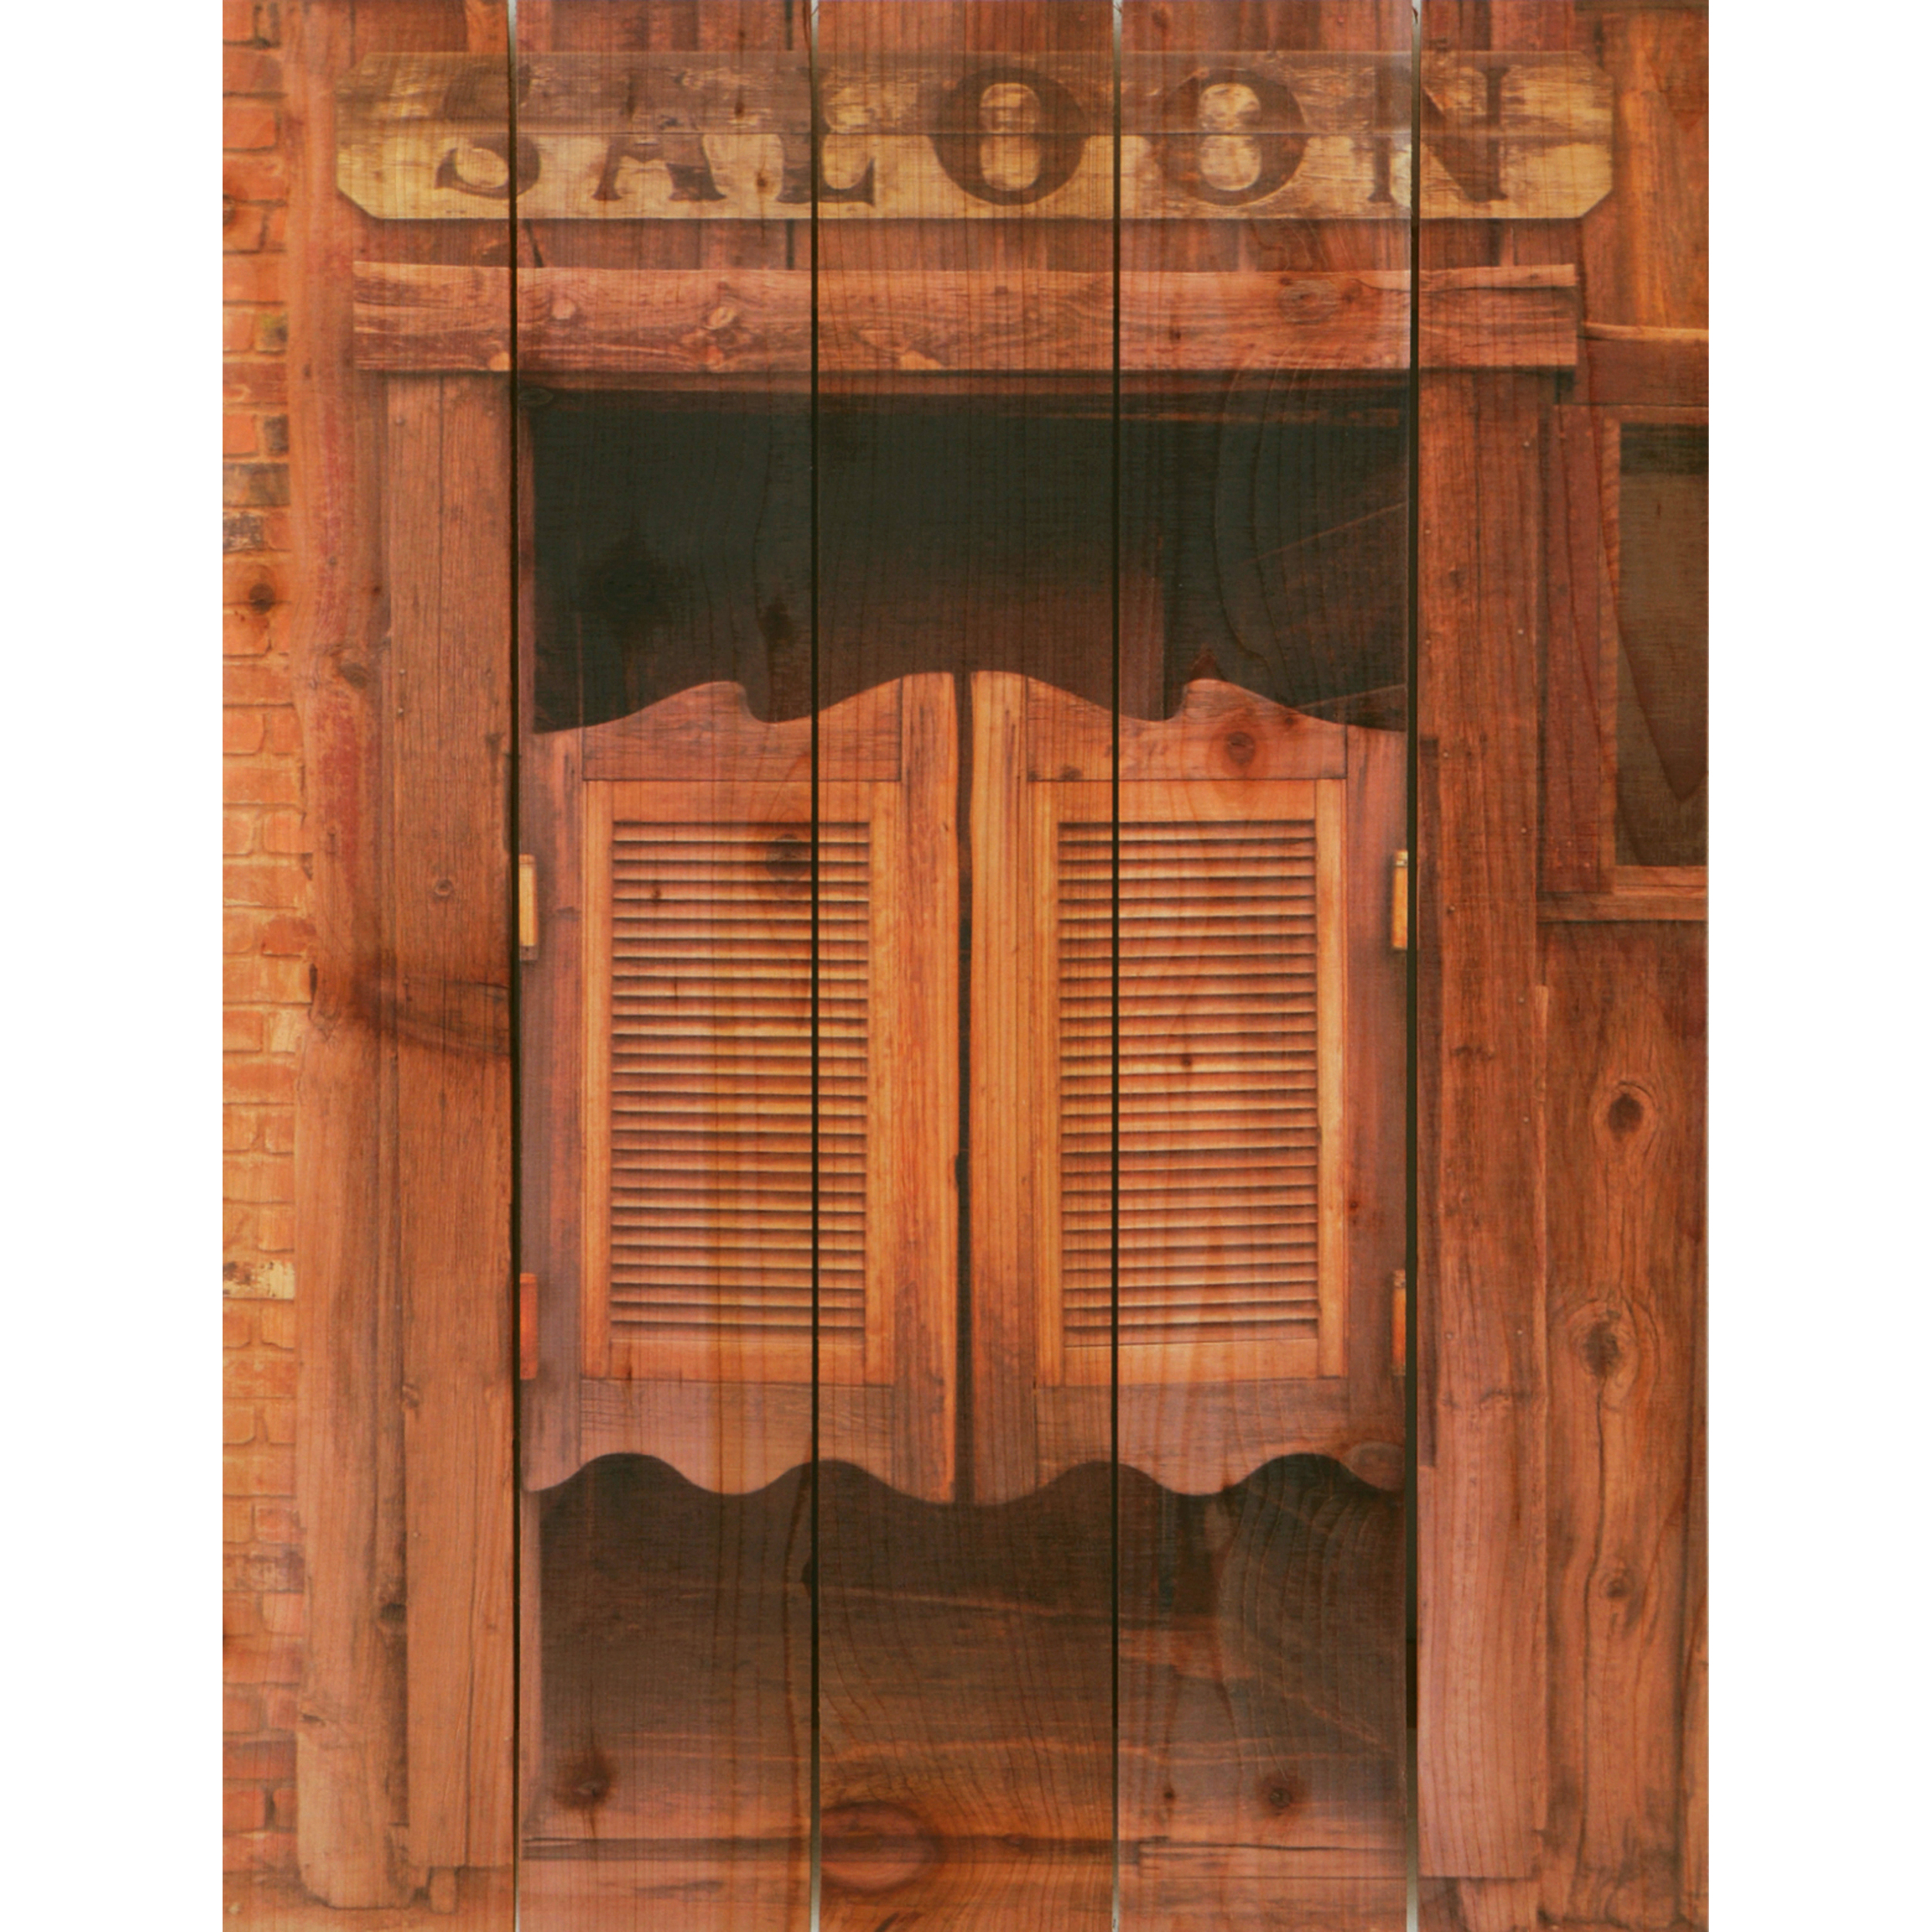 Daydream Gizaun Cedar Wall Art, Saloon Door, 28" X 36"